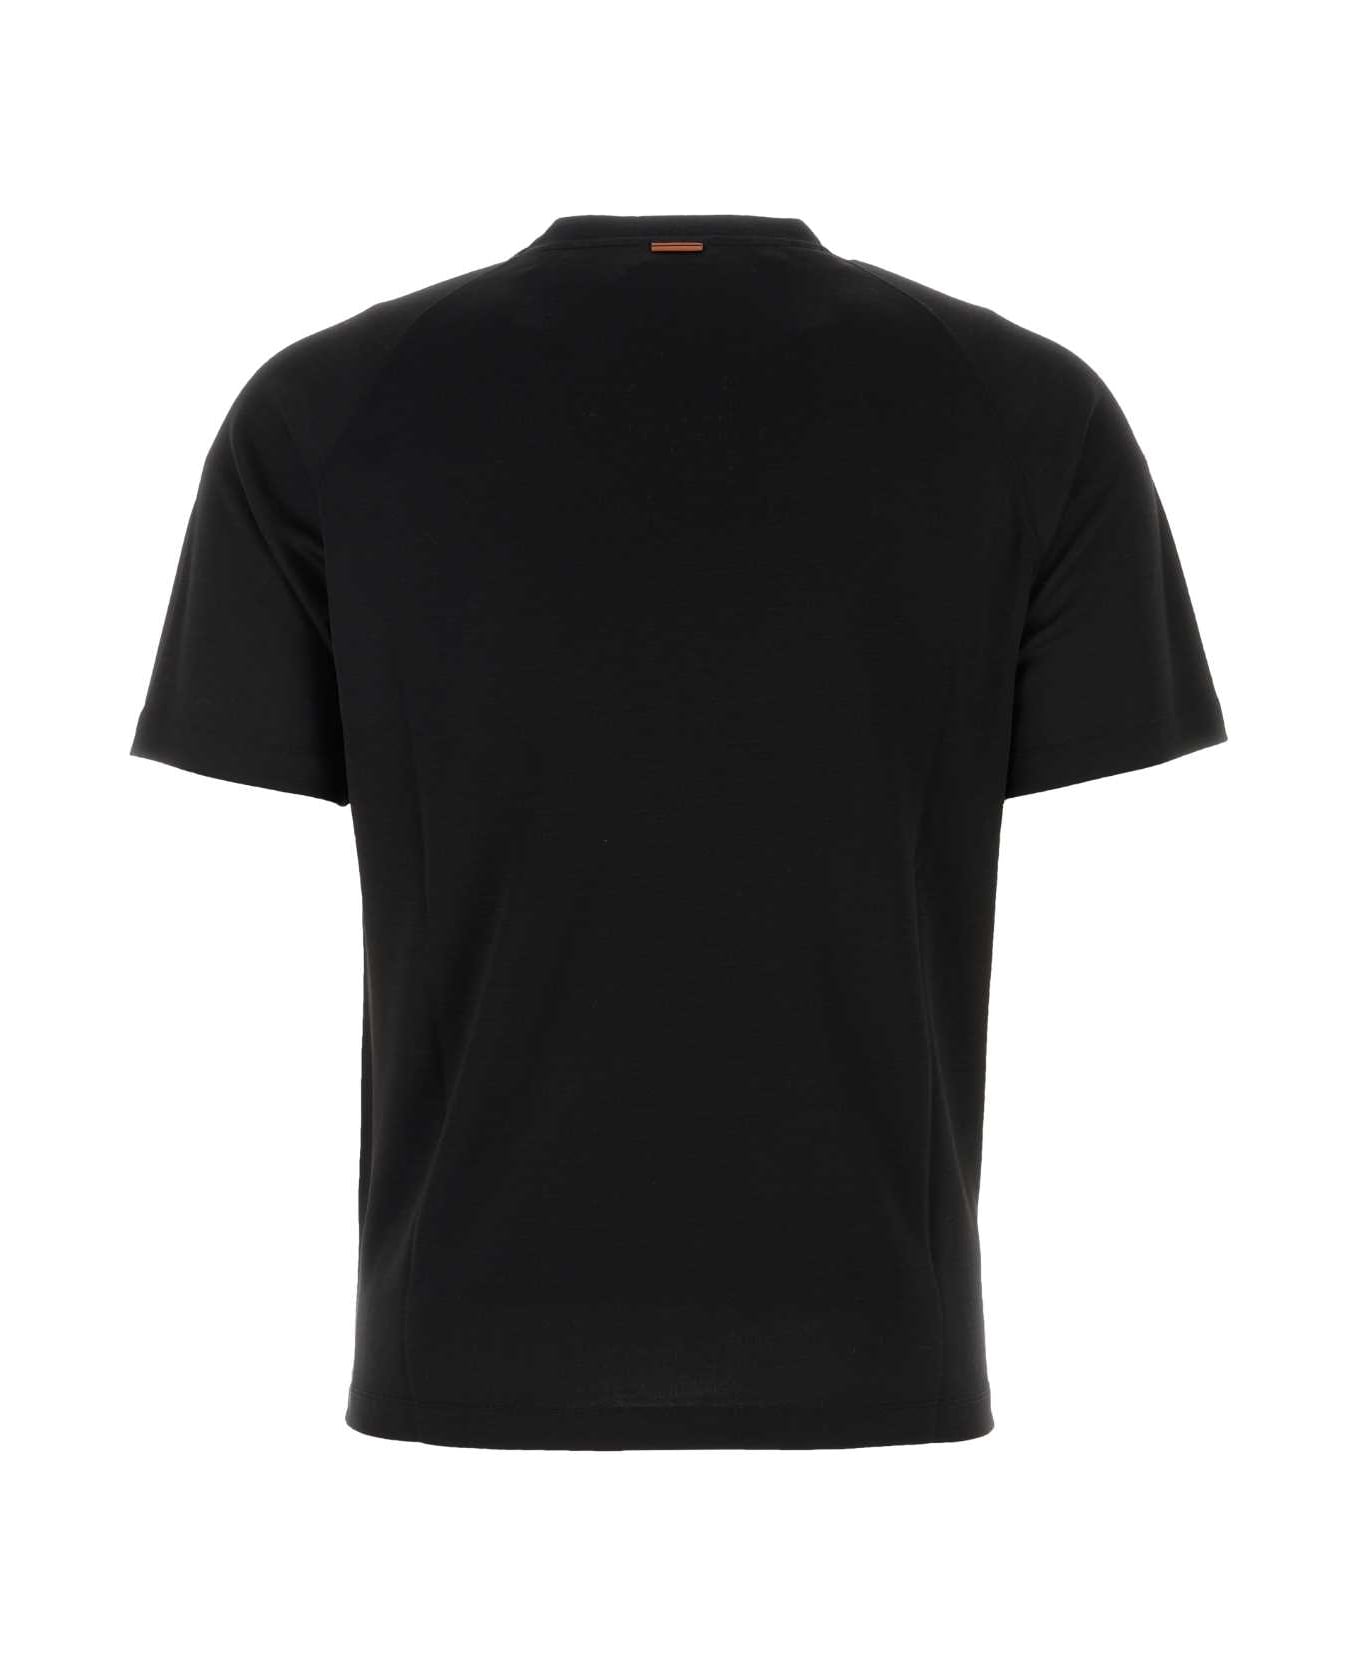 Zegna Black Wool T-shirt - K09 シャツ